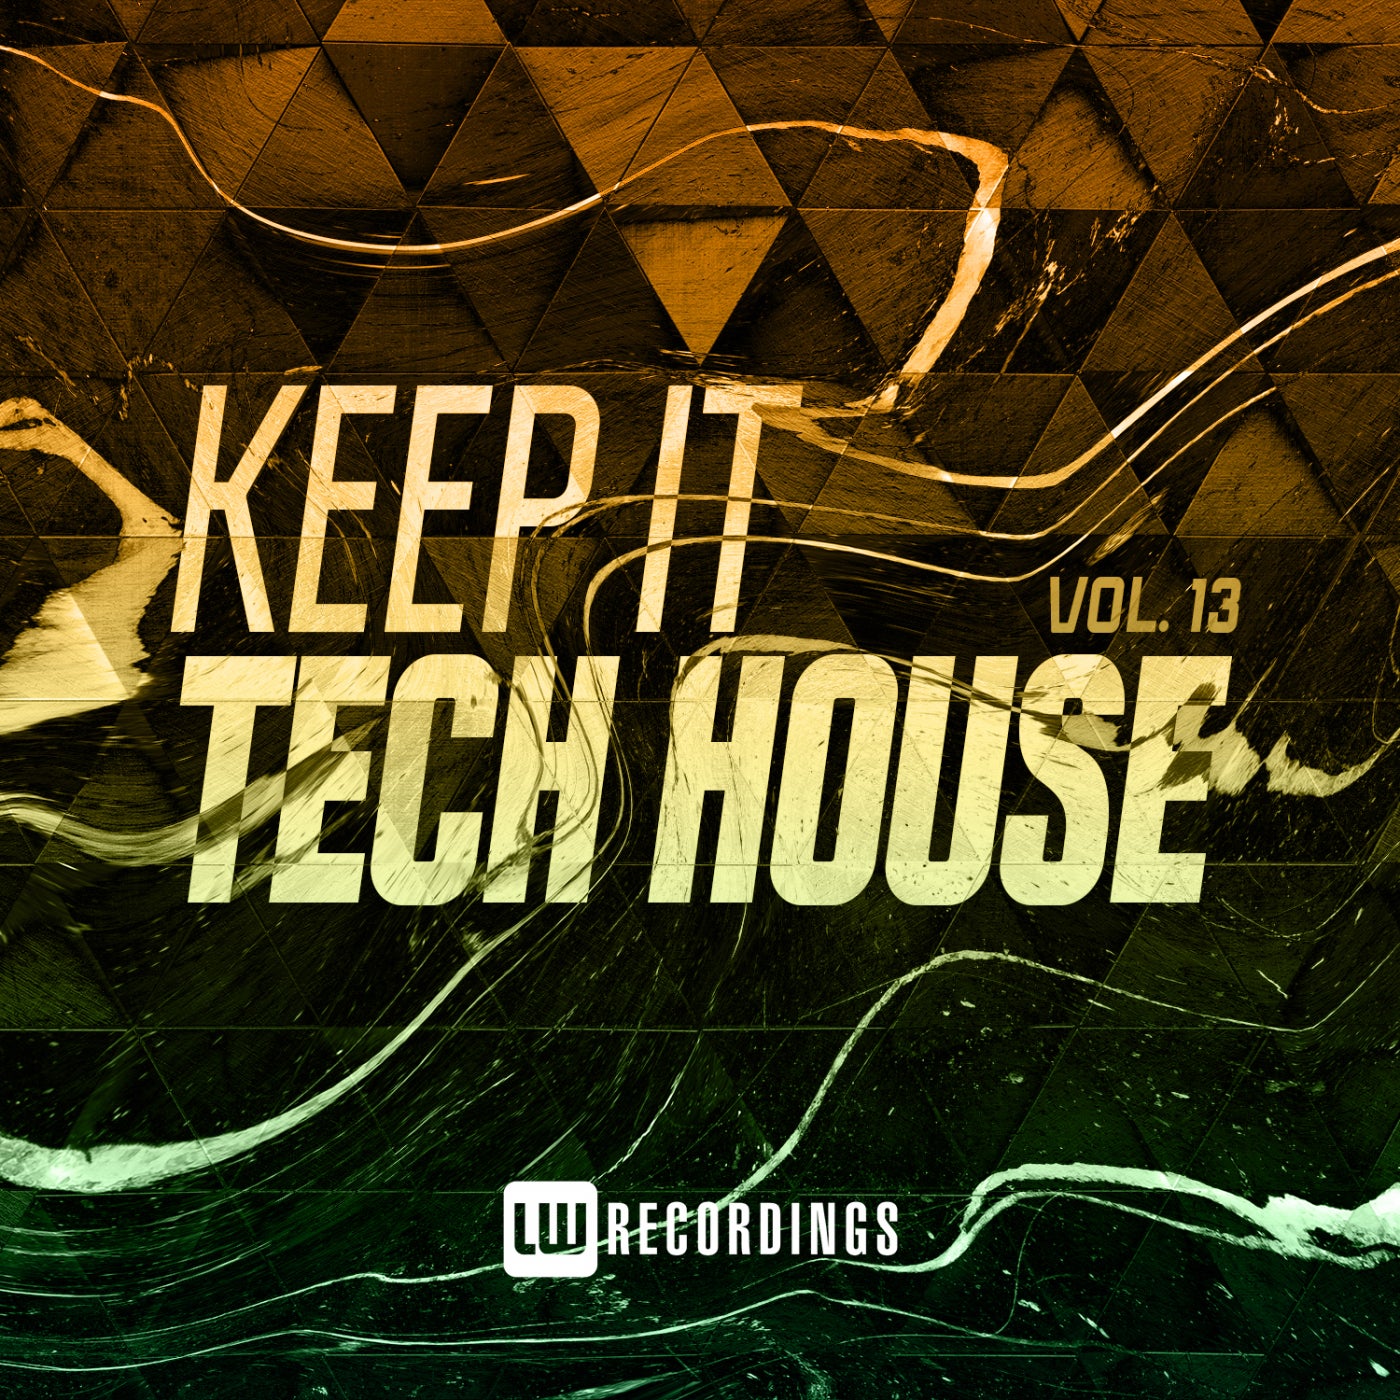 Keep It Tech House, Vol. 13